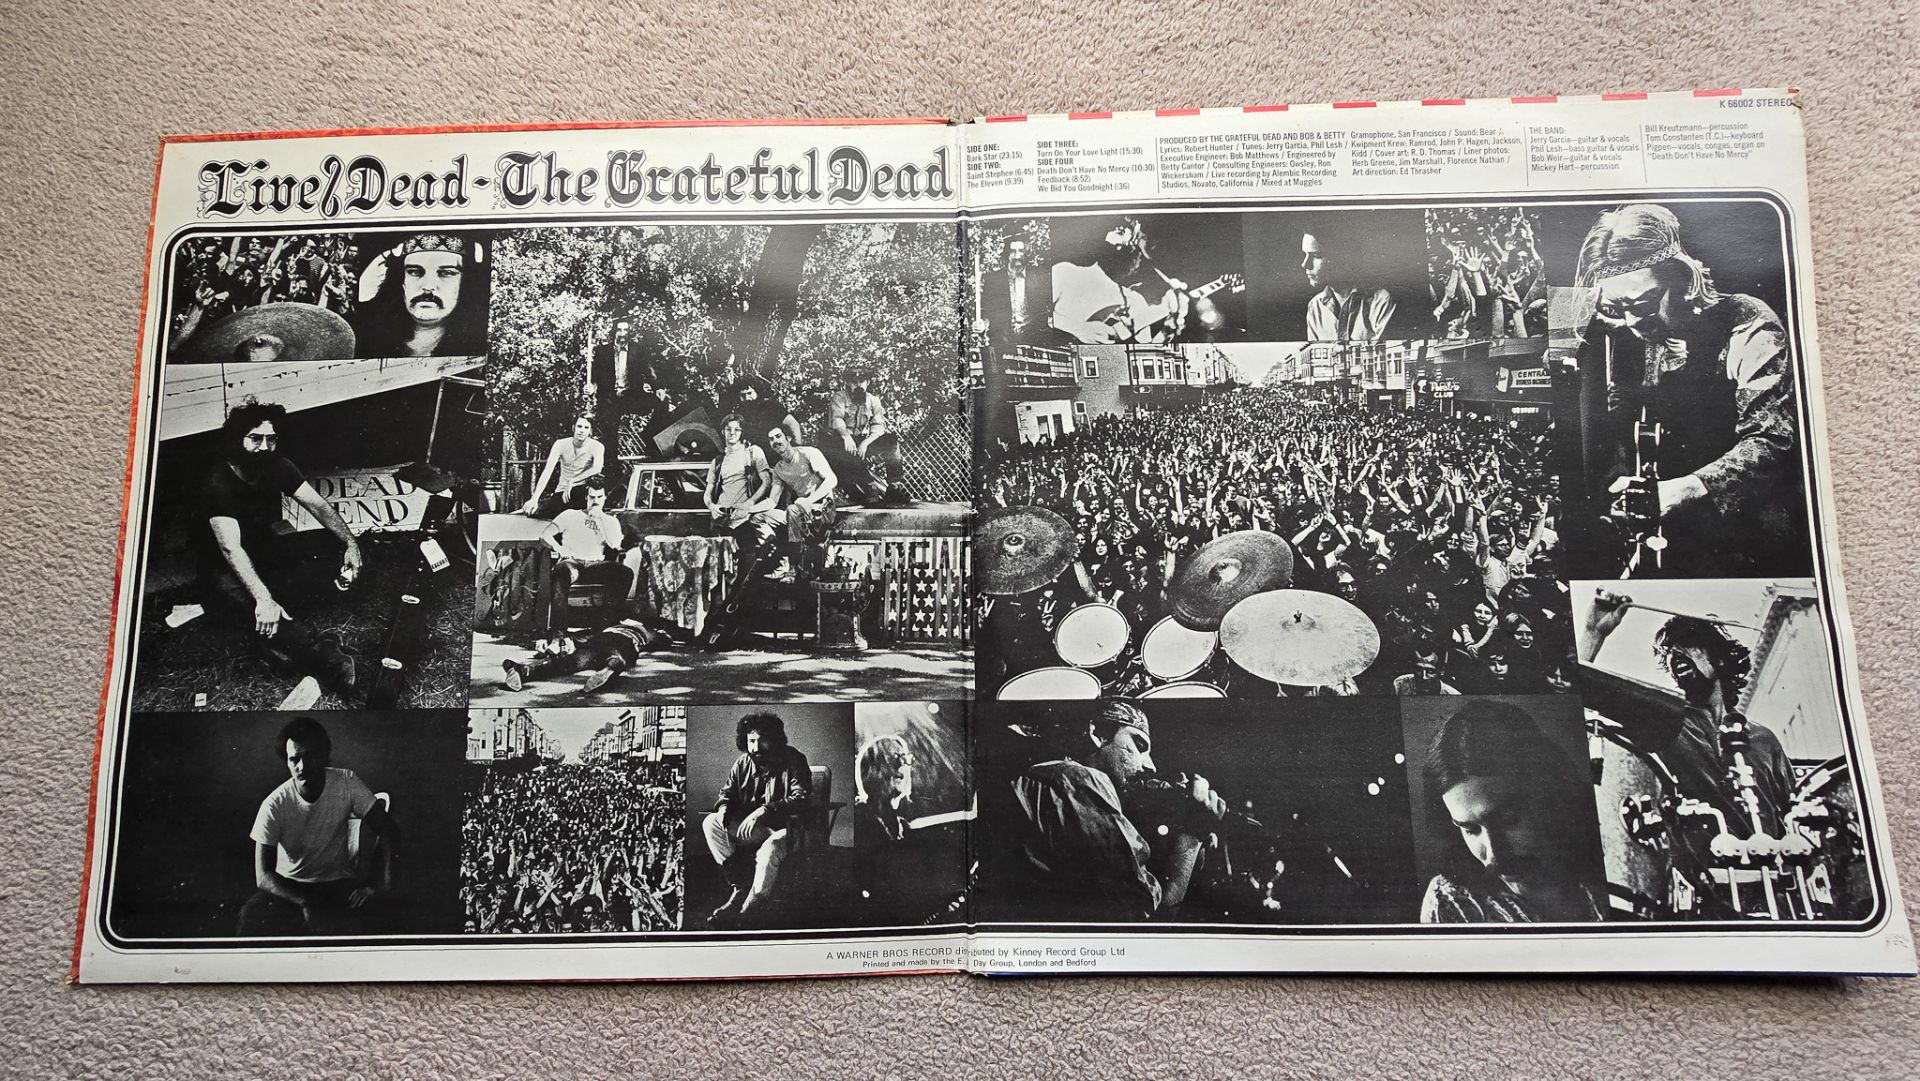 The Grateful Dead – Live/Dead Mint UK 1971 Double vinyl LP + Skeletons from the closet - Image 4 of 13